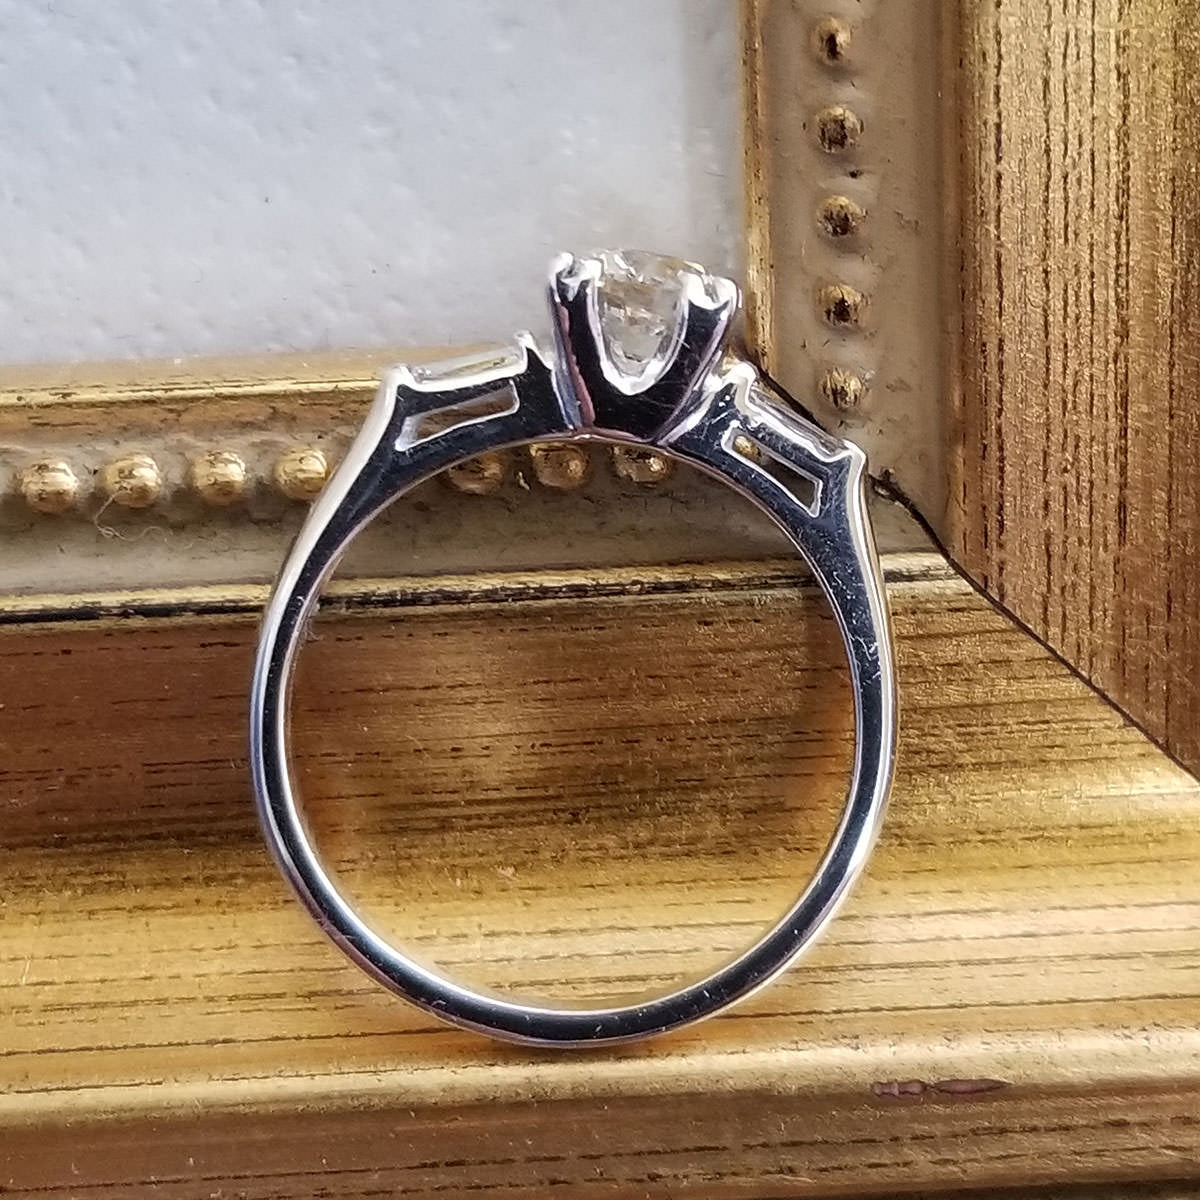 Replica Art Deco Engagement Ring #2301-2